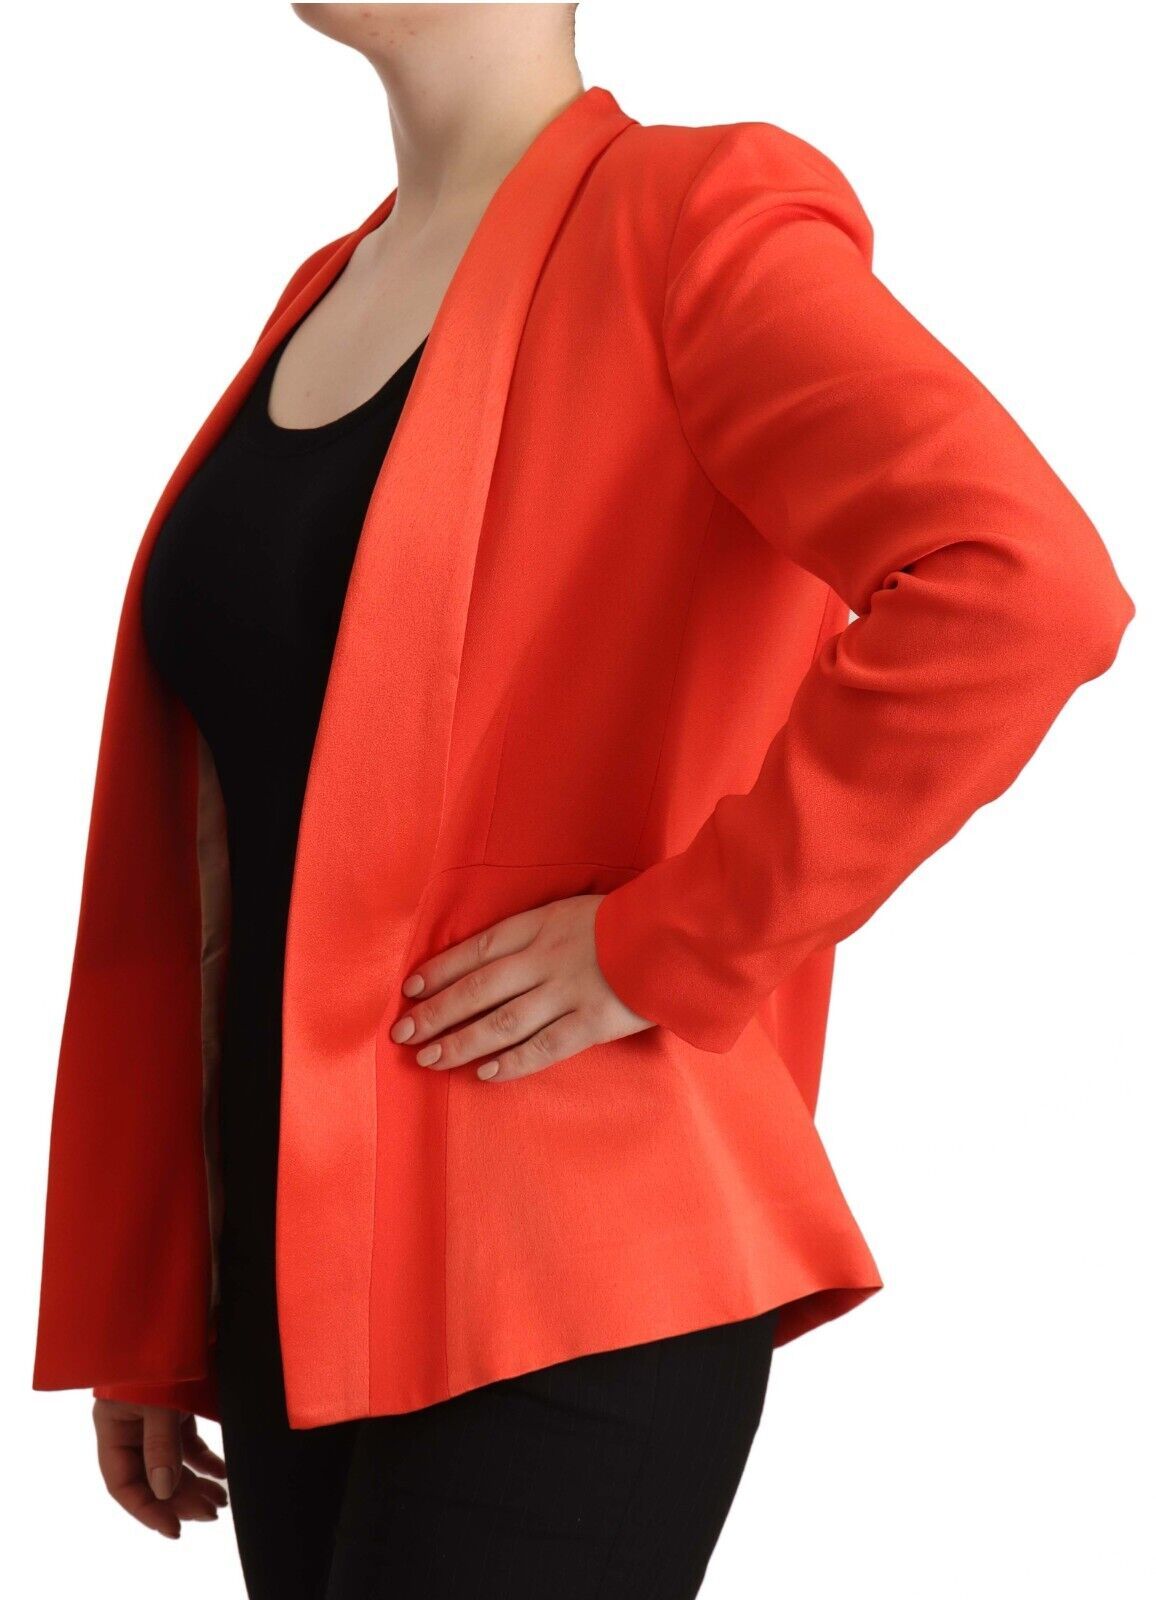 CO|TE Orange Long Sleeves Acetate Blazer Pocket Overcoat Jacket